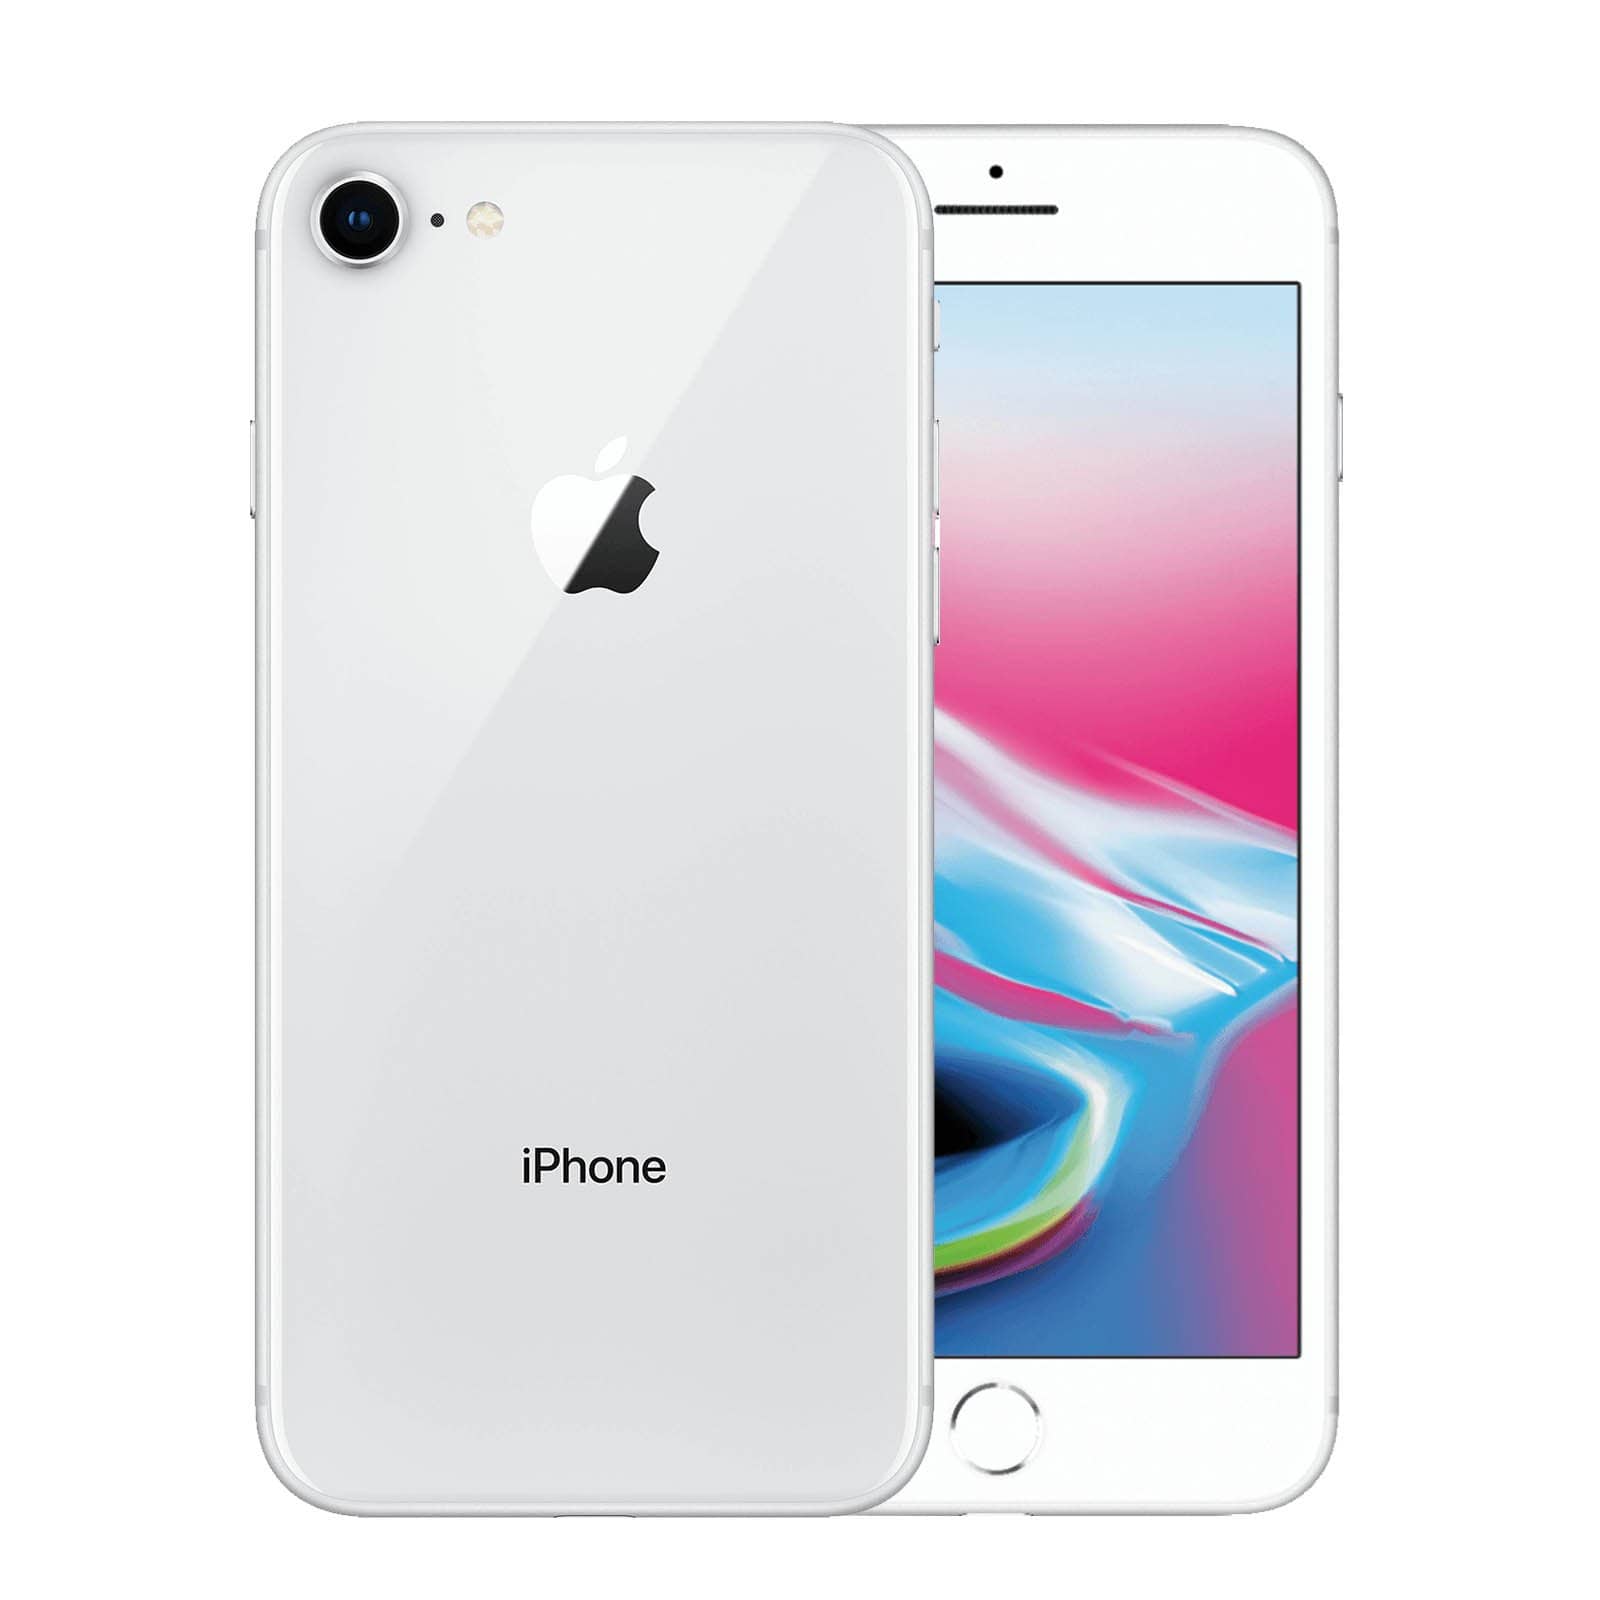 Apple iPhone 8 256GB Silver Good - Unlocked 256GB Silver Good